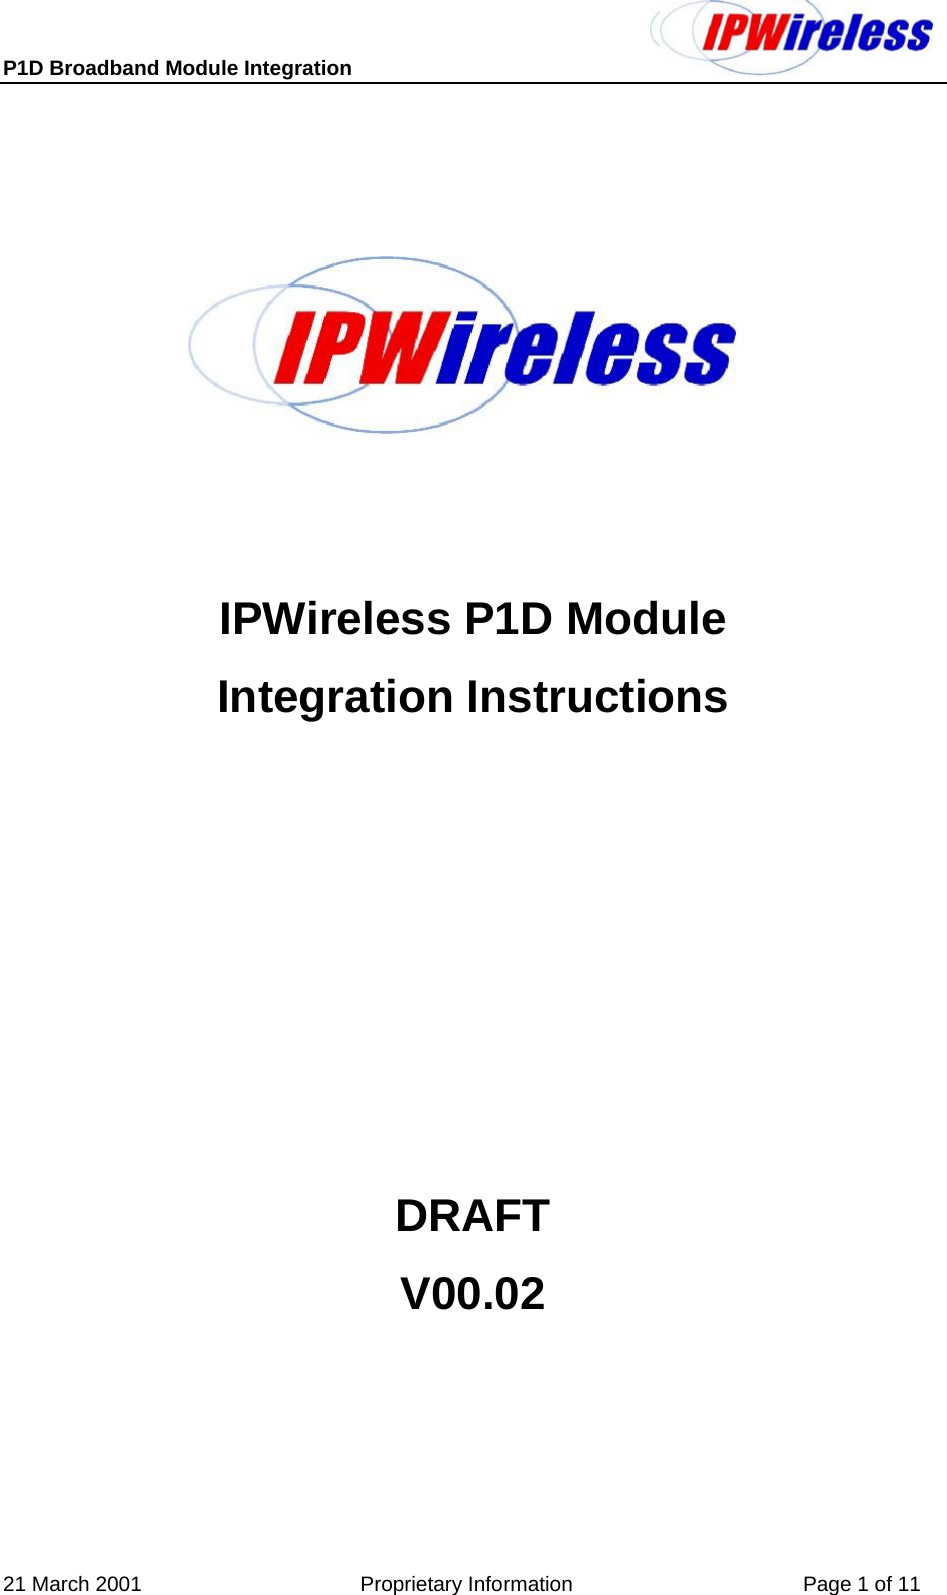 P1D Broadband Module Integration     21 March 2001                                      Proprietary Information                                        Page 1 of 11       IPWireless P1D Module Integration Instructions       DRAFT V00.02   